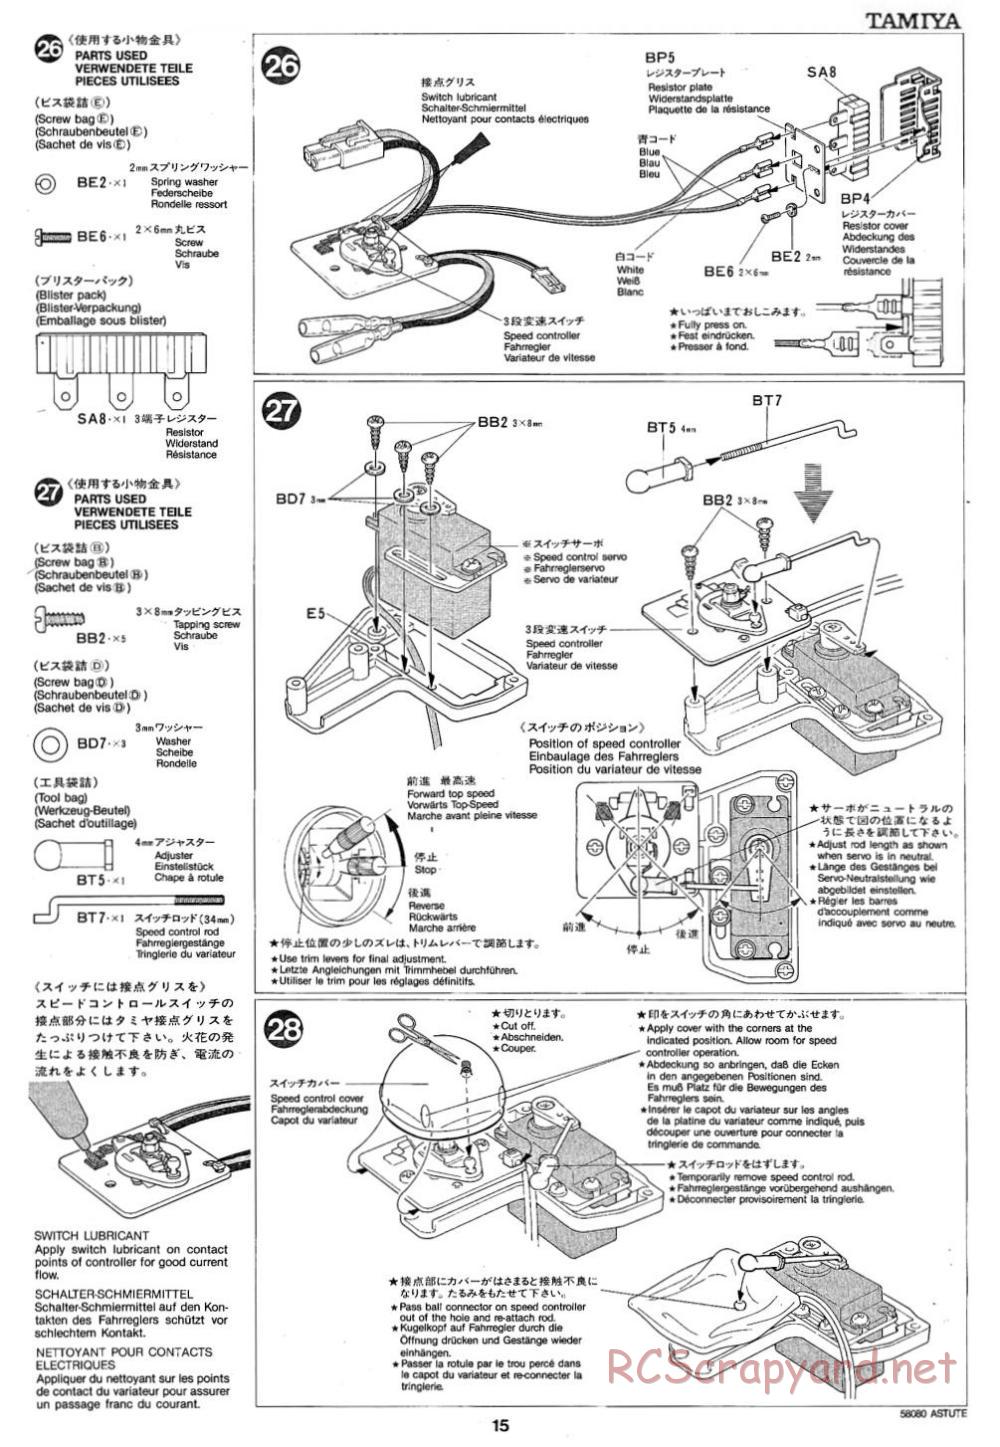 Tamiya - Astute - 58080 - Manual - Page 15